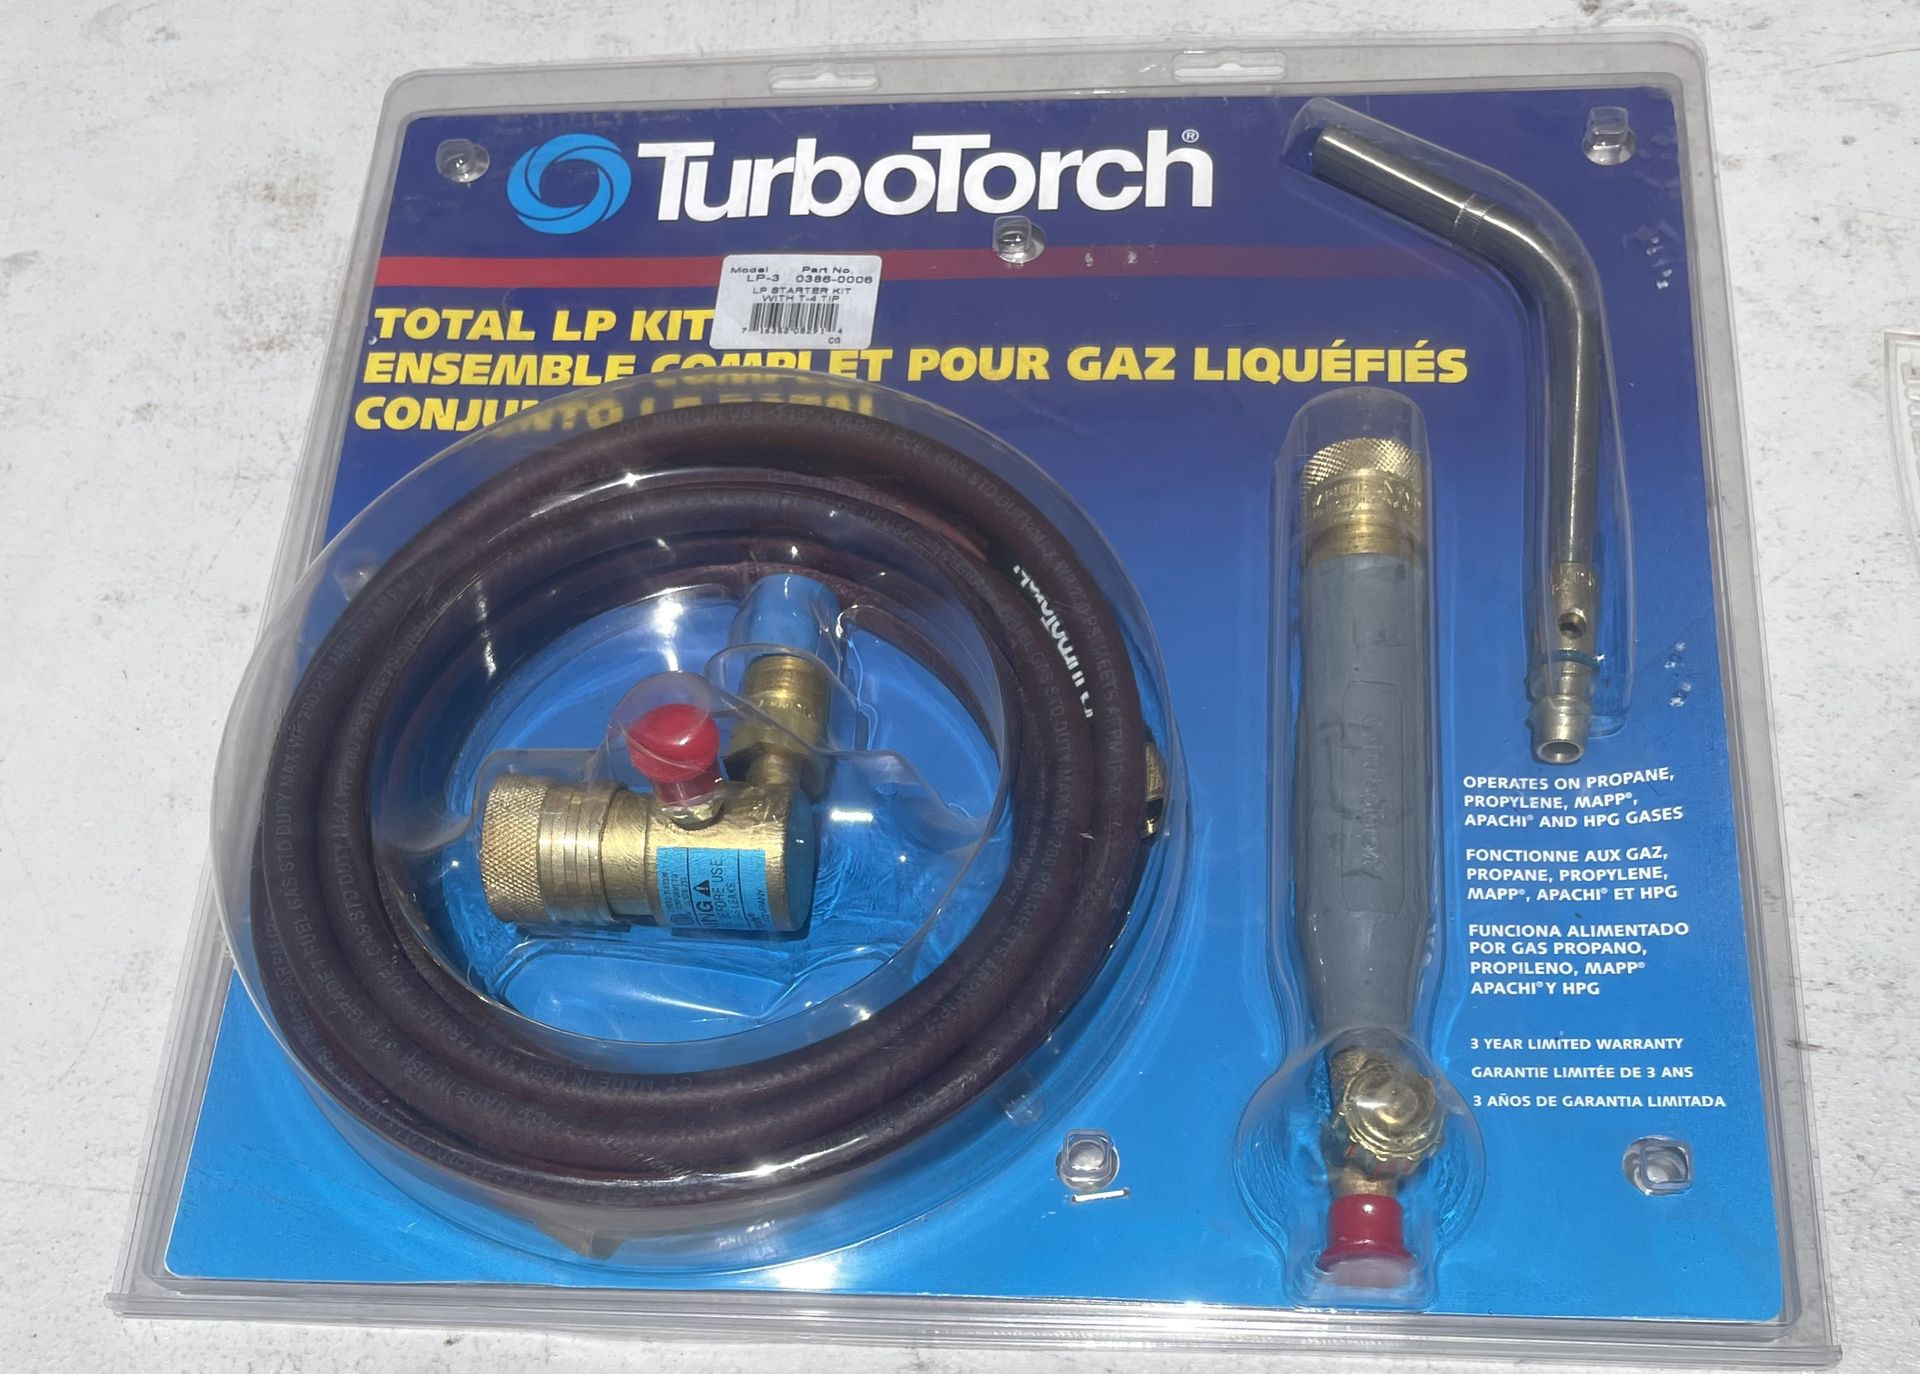 Turbo Torch